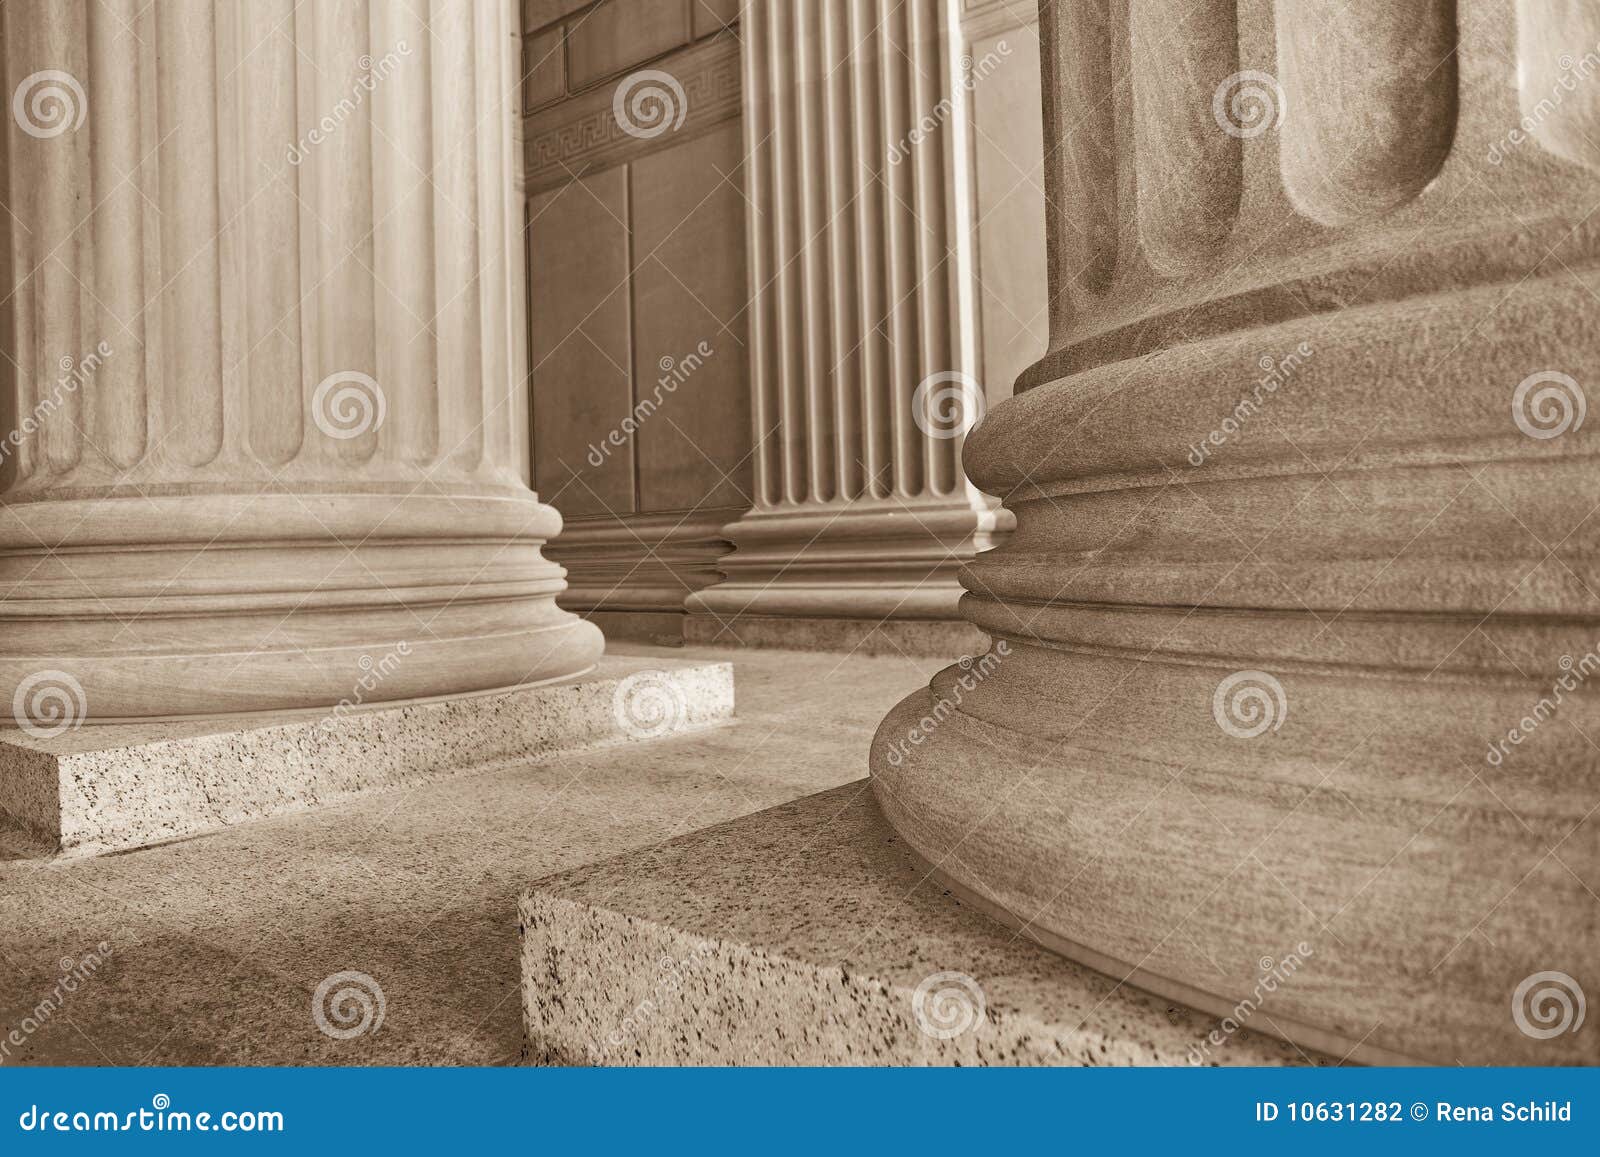 neoclasical columns